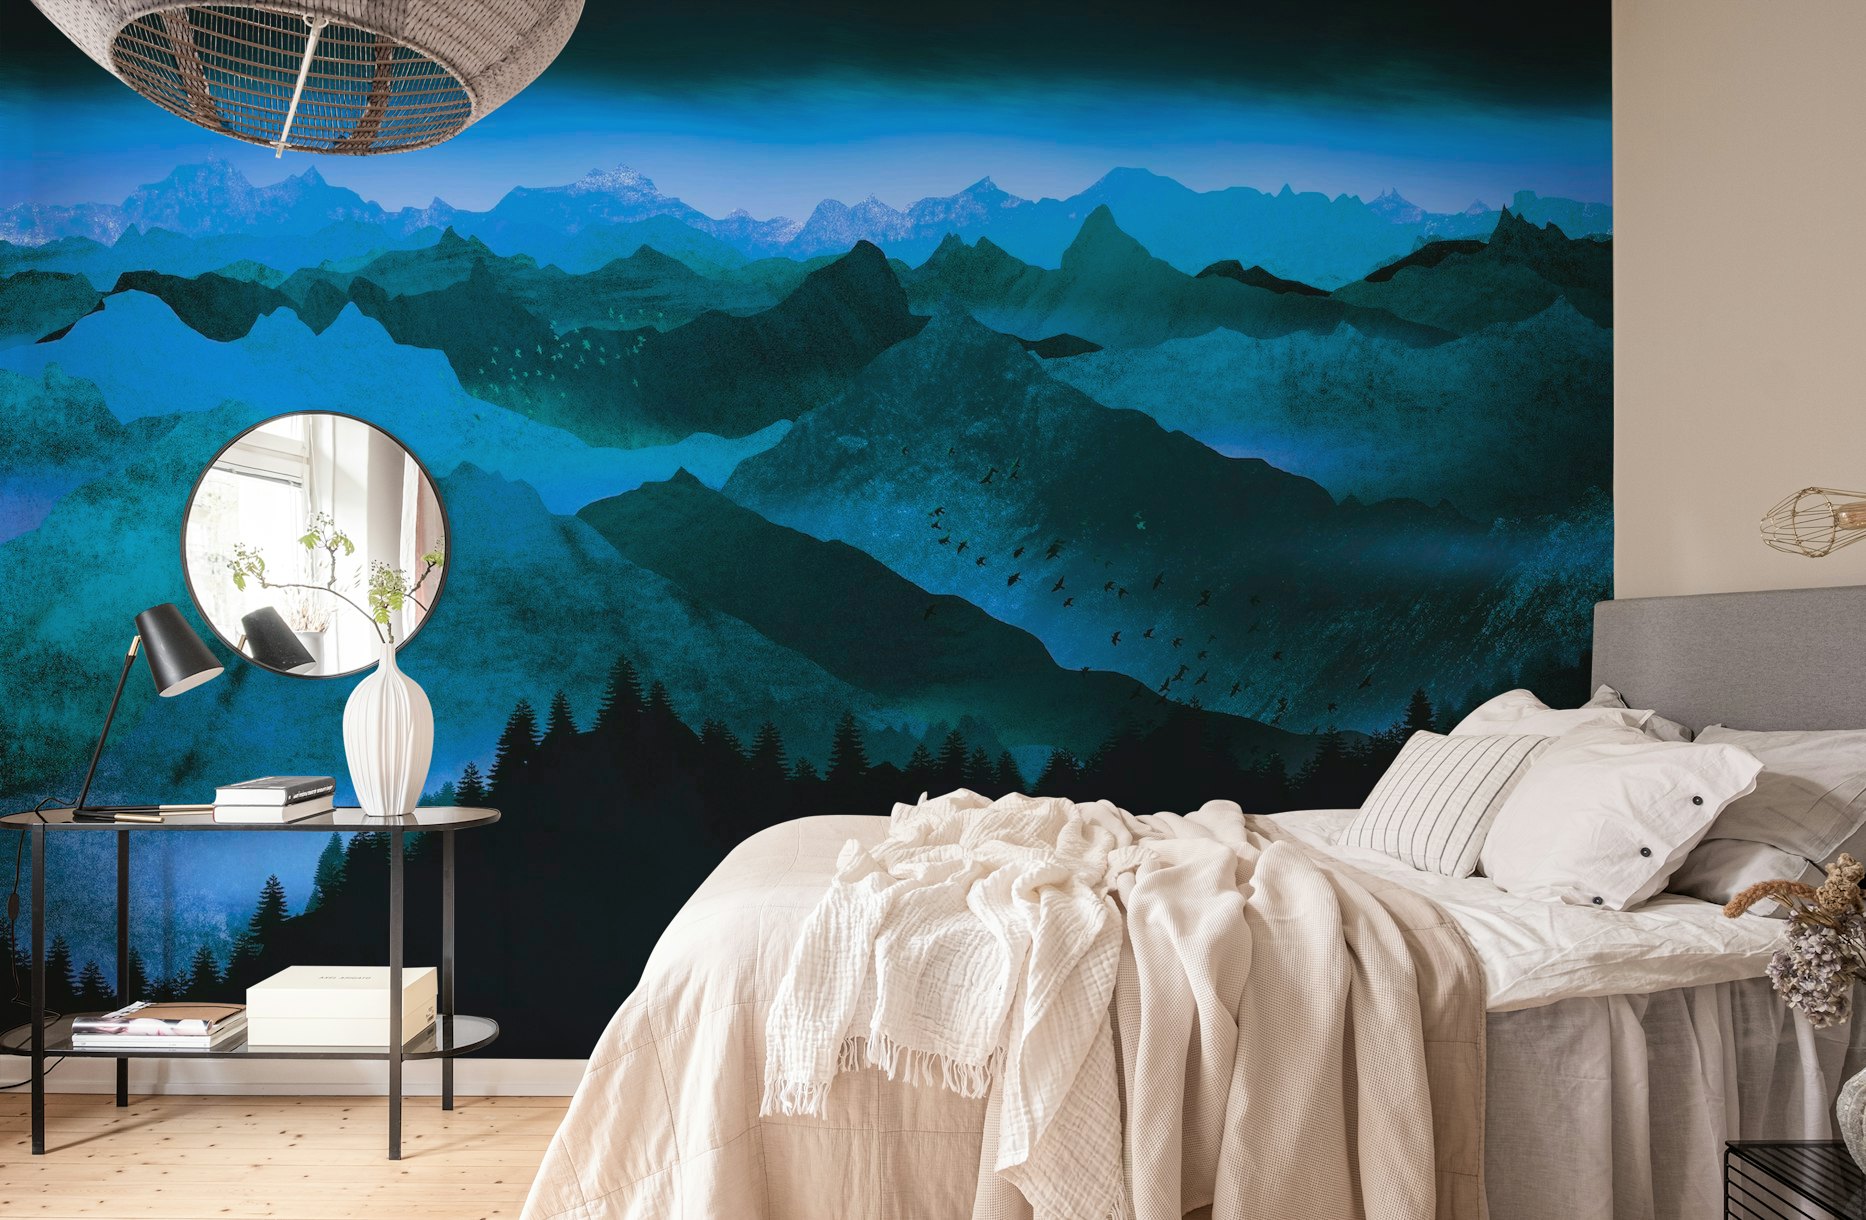 Unexplored mountains wallpaper